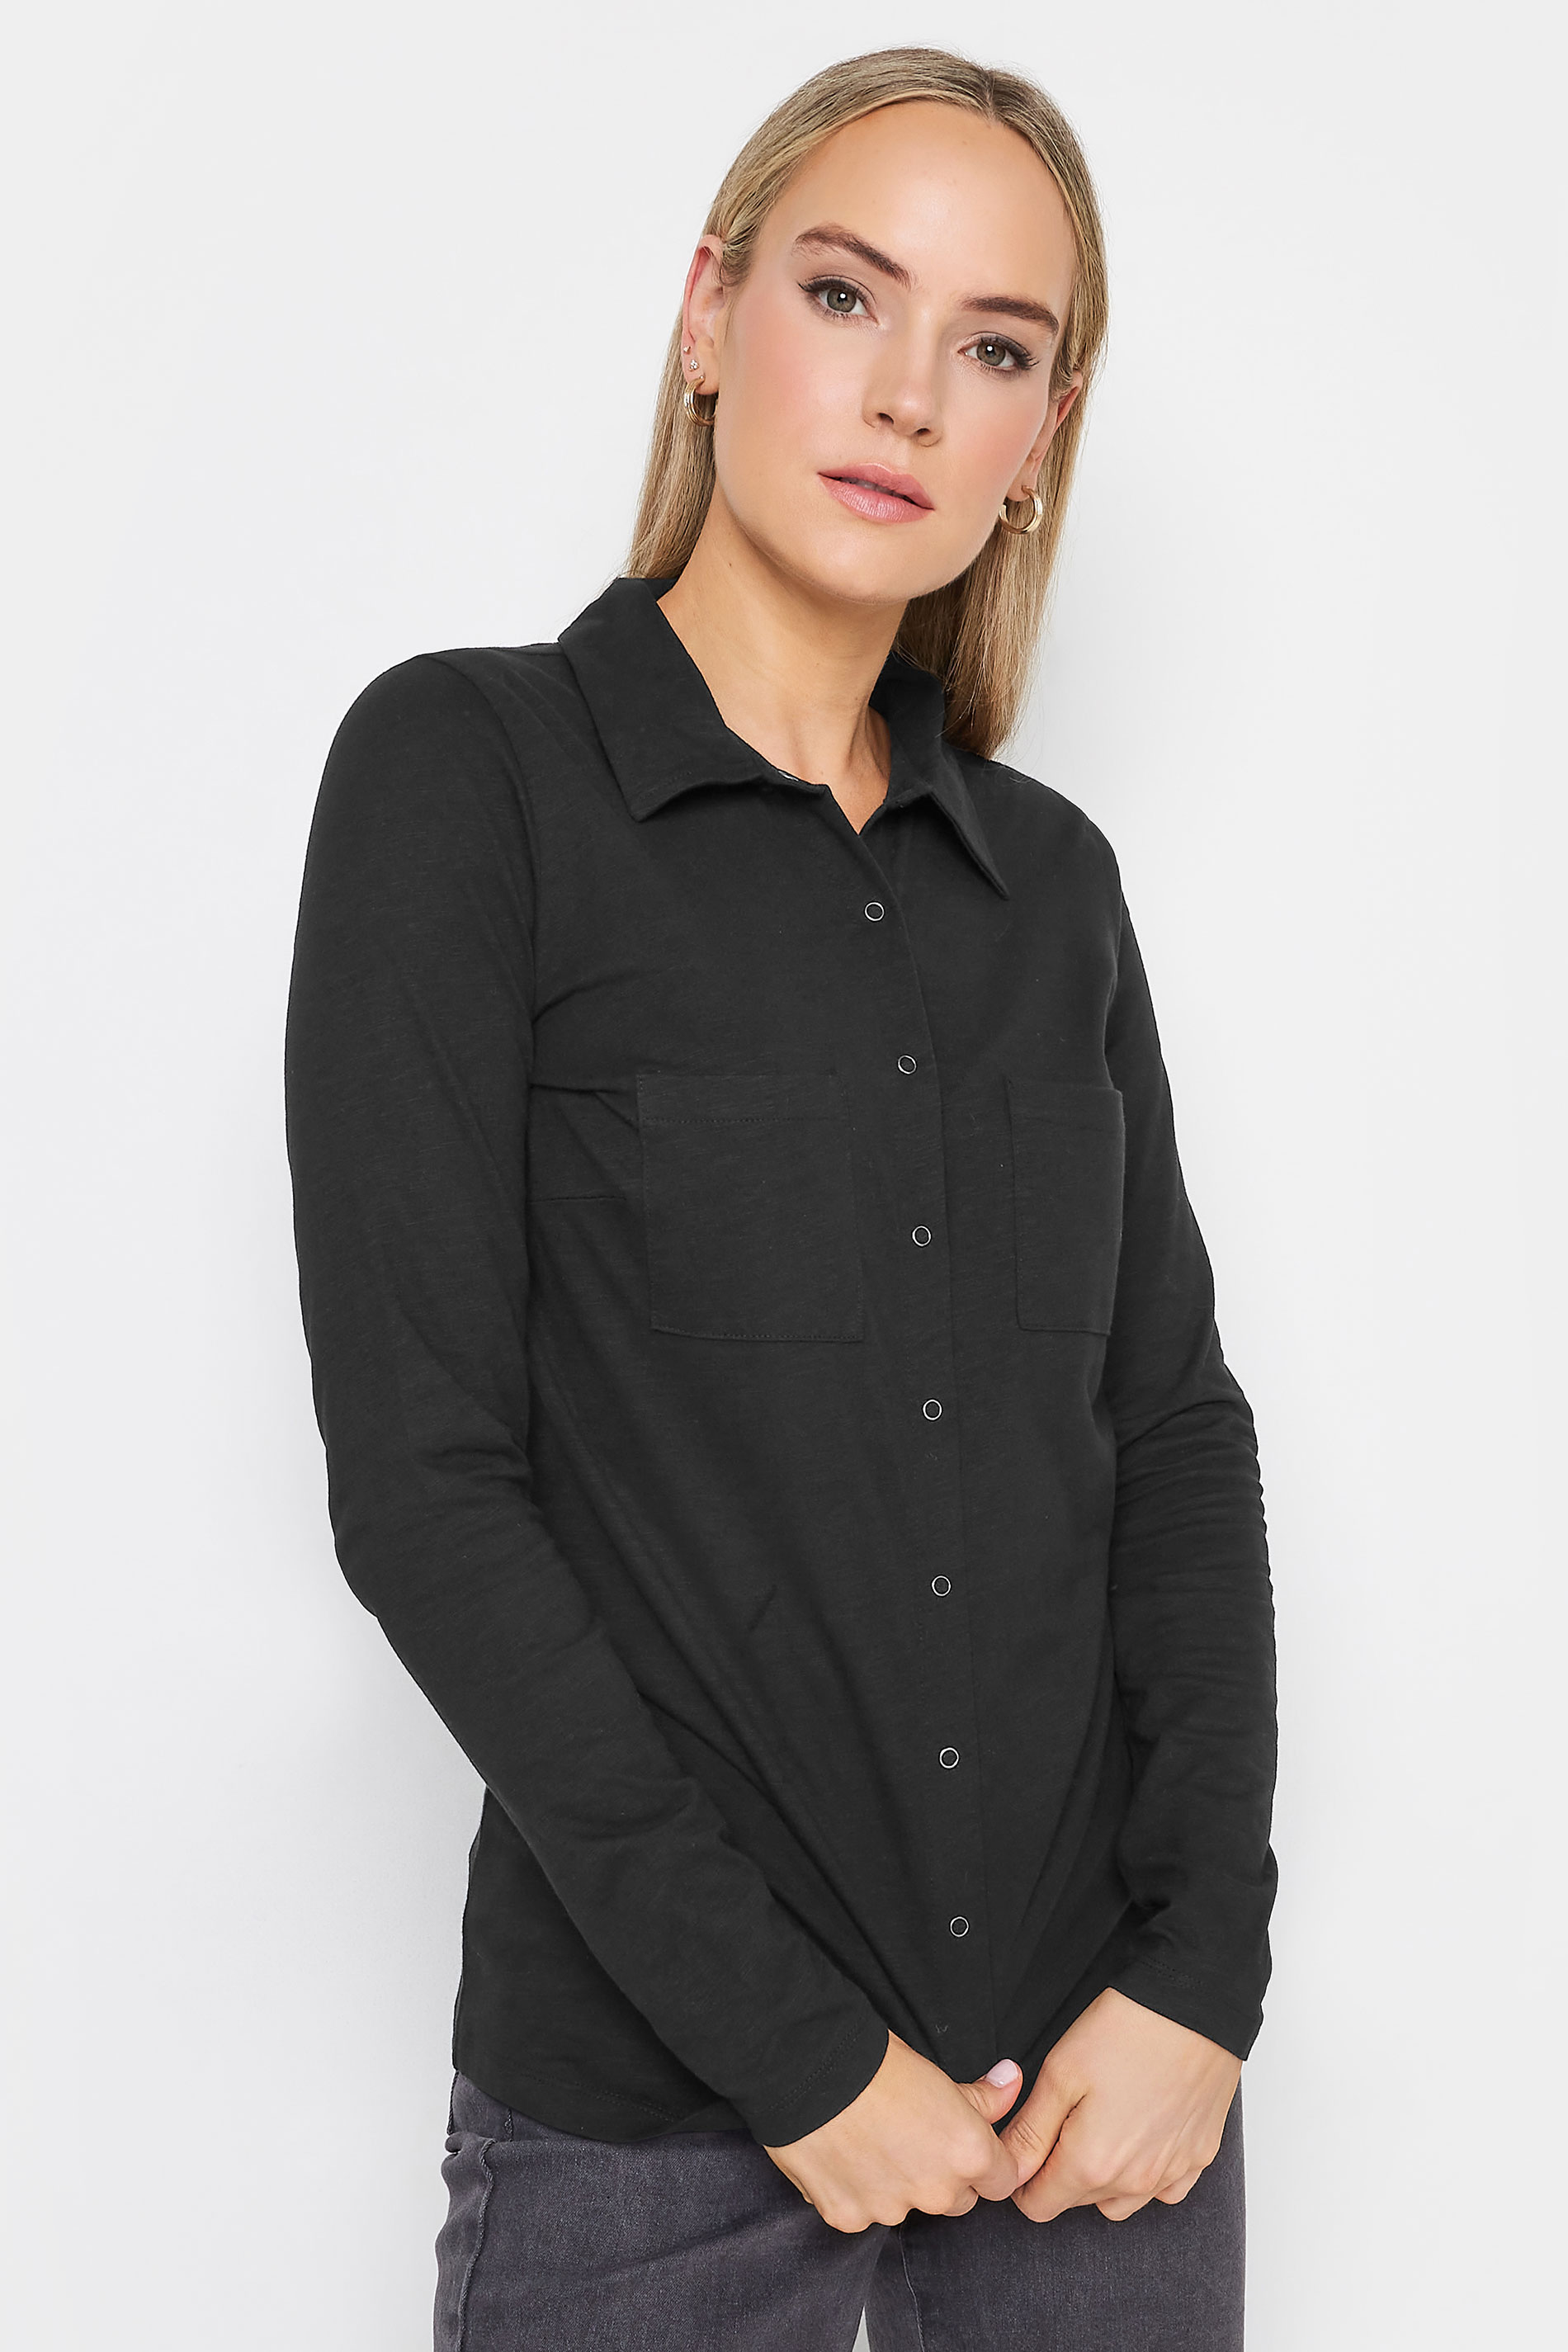 LTS Tall Women's Black Cotton Shirt | Long Tall Sally 1